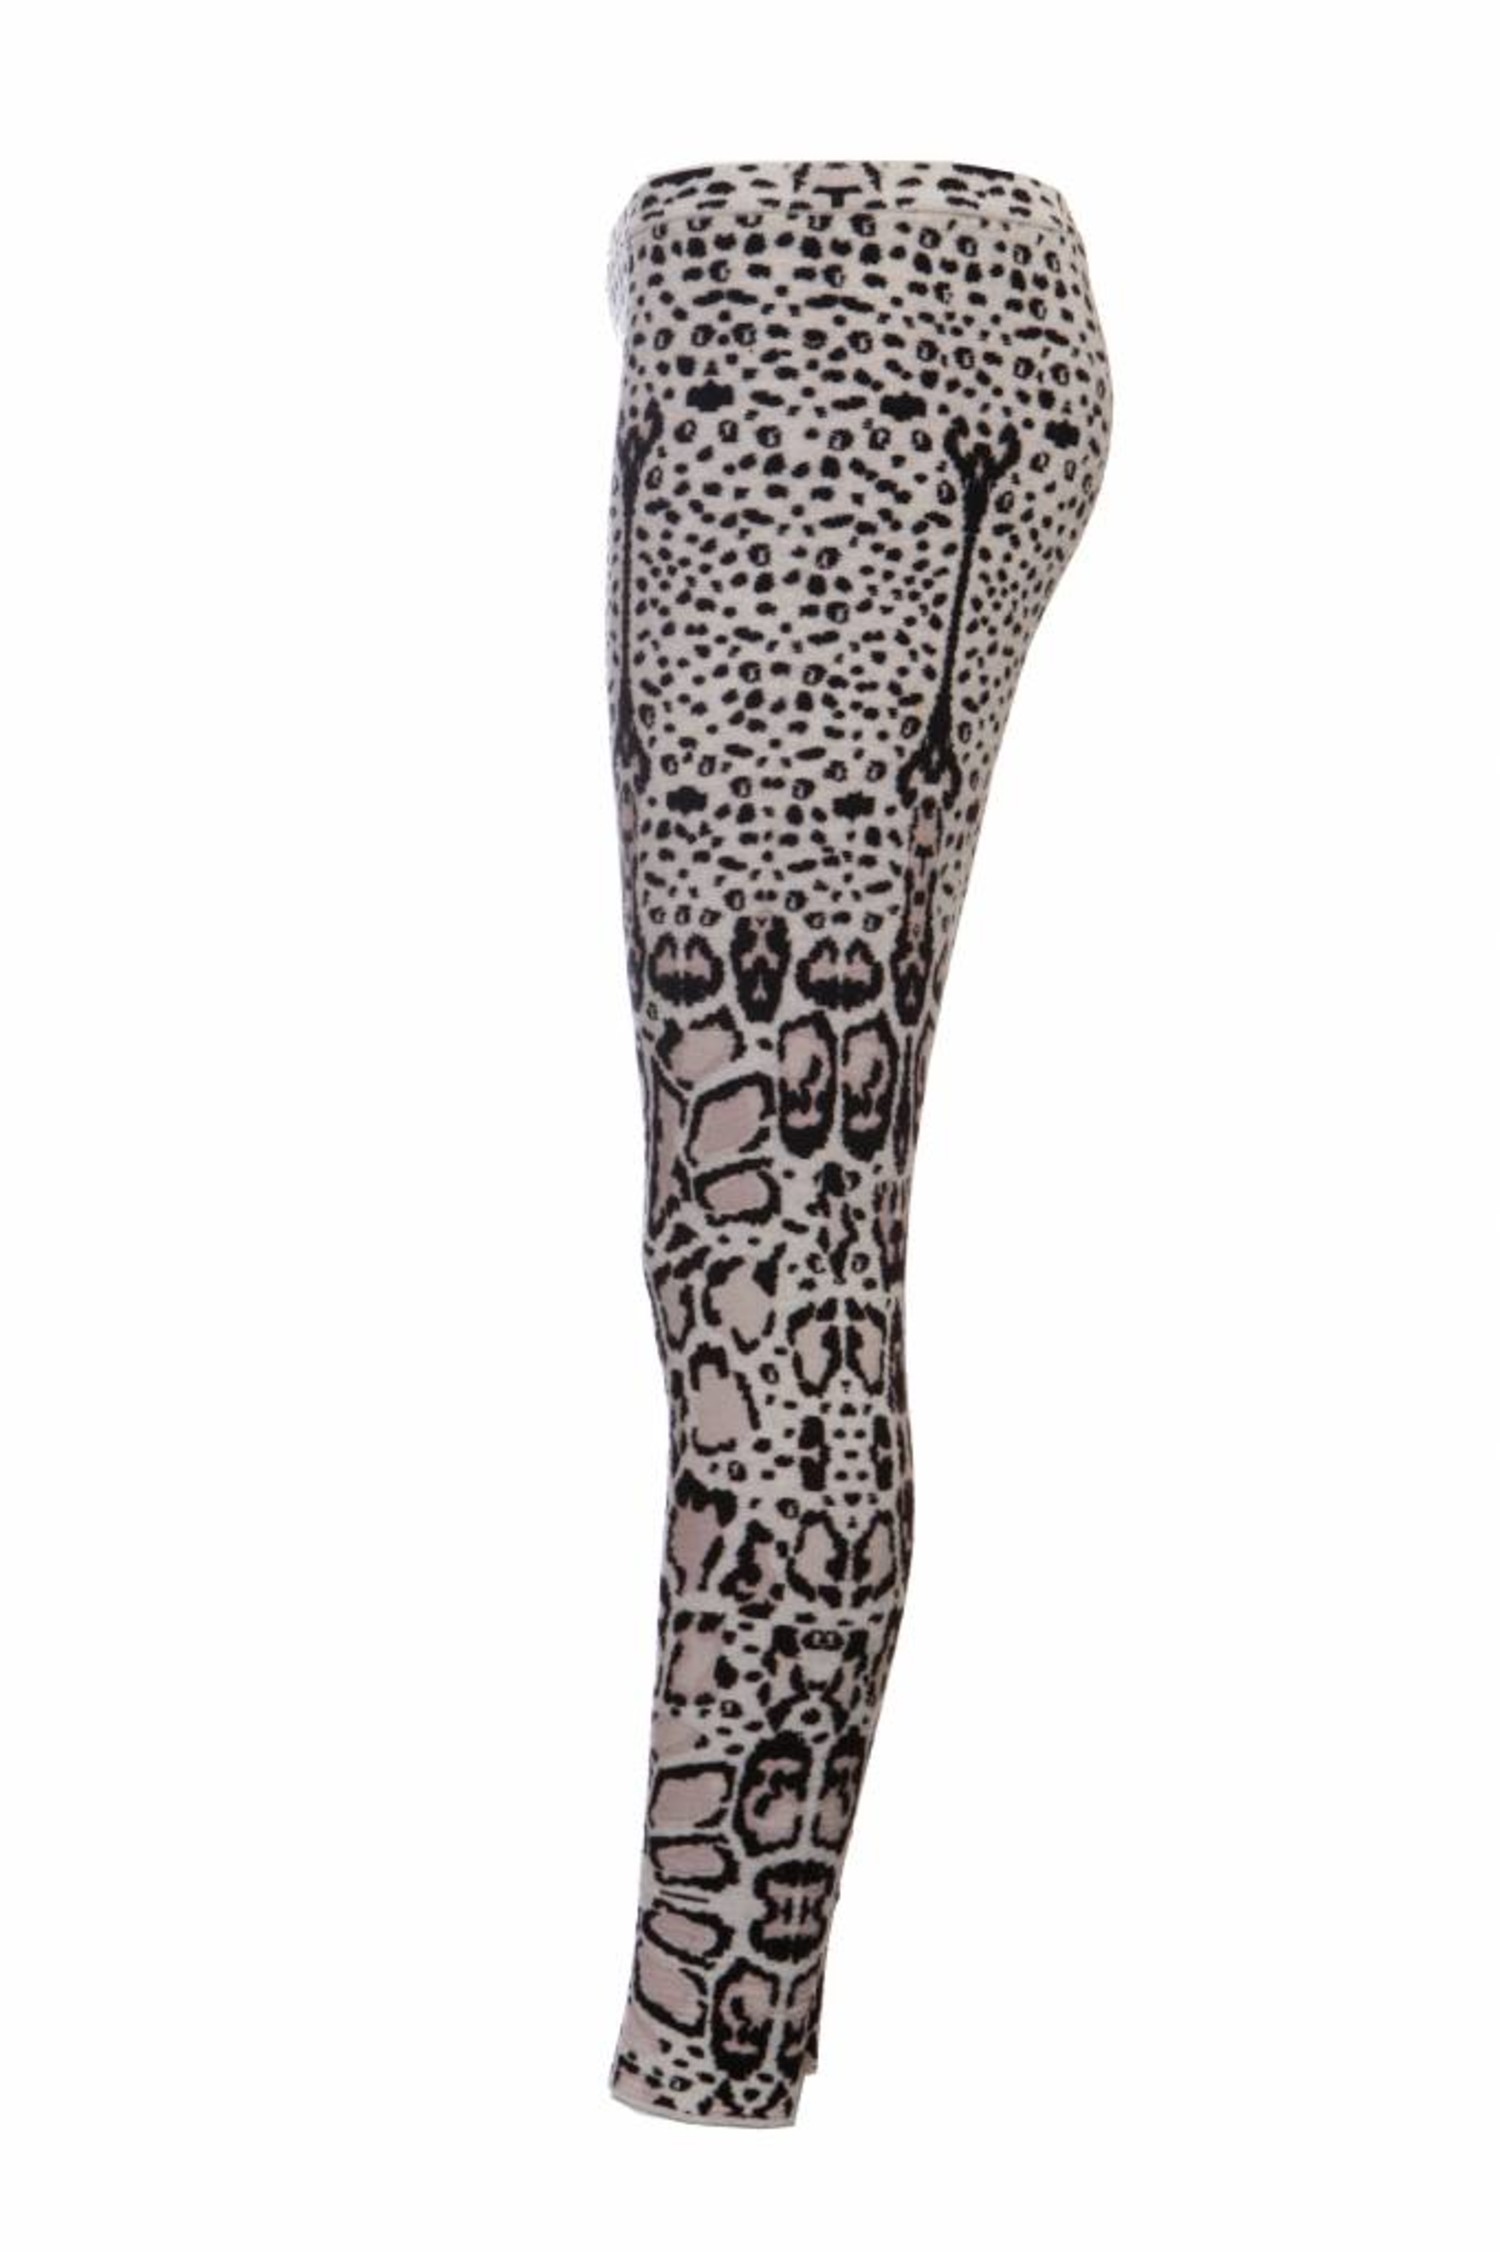 Smeren nicotine Kaliber Alaïa Azzedine Alaia, zwart/wit/neutraal gekleurde luipaard legging in maat  38FR/S. - Unique Designer Pieces